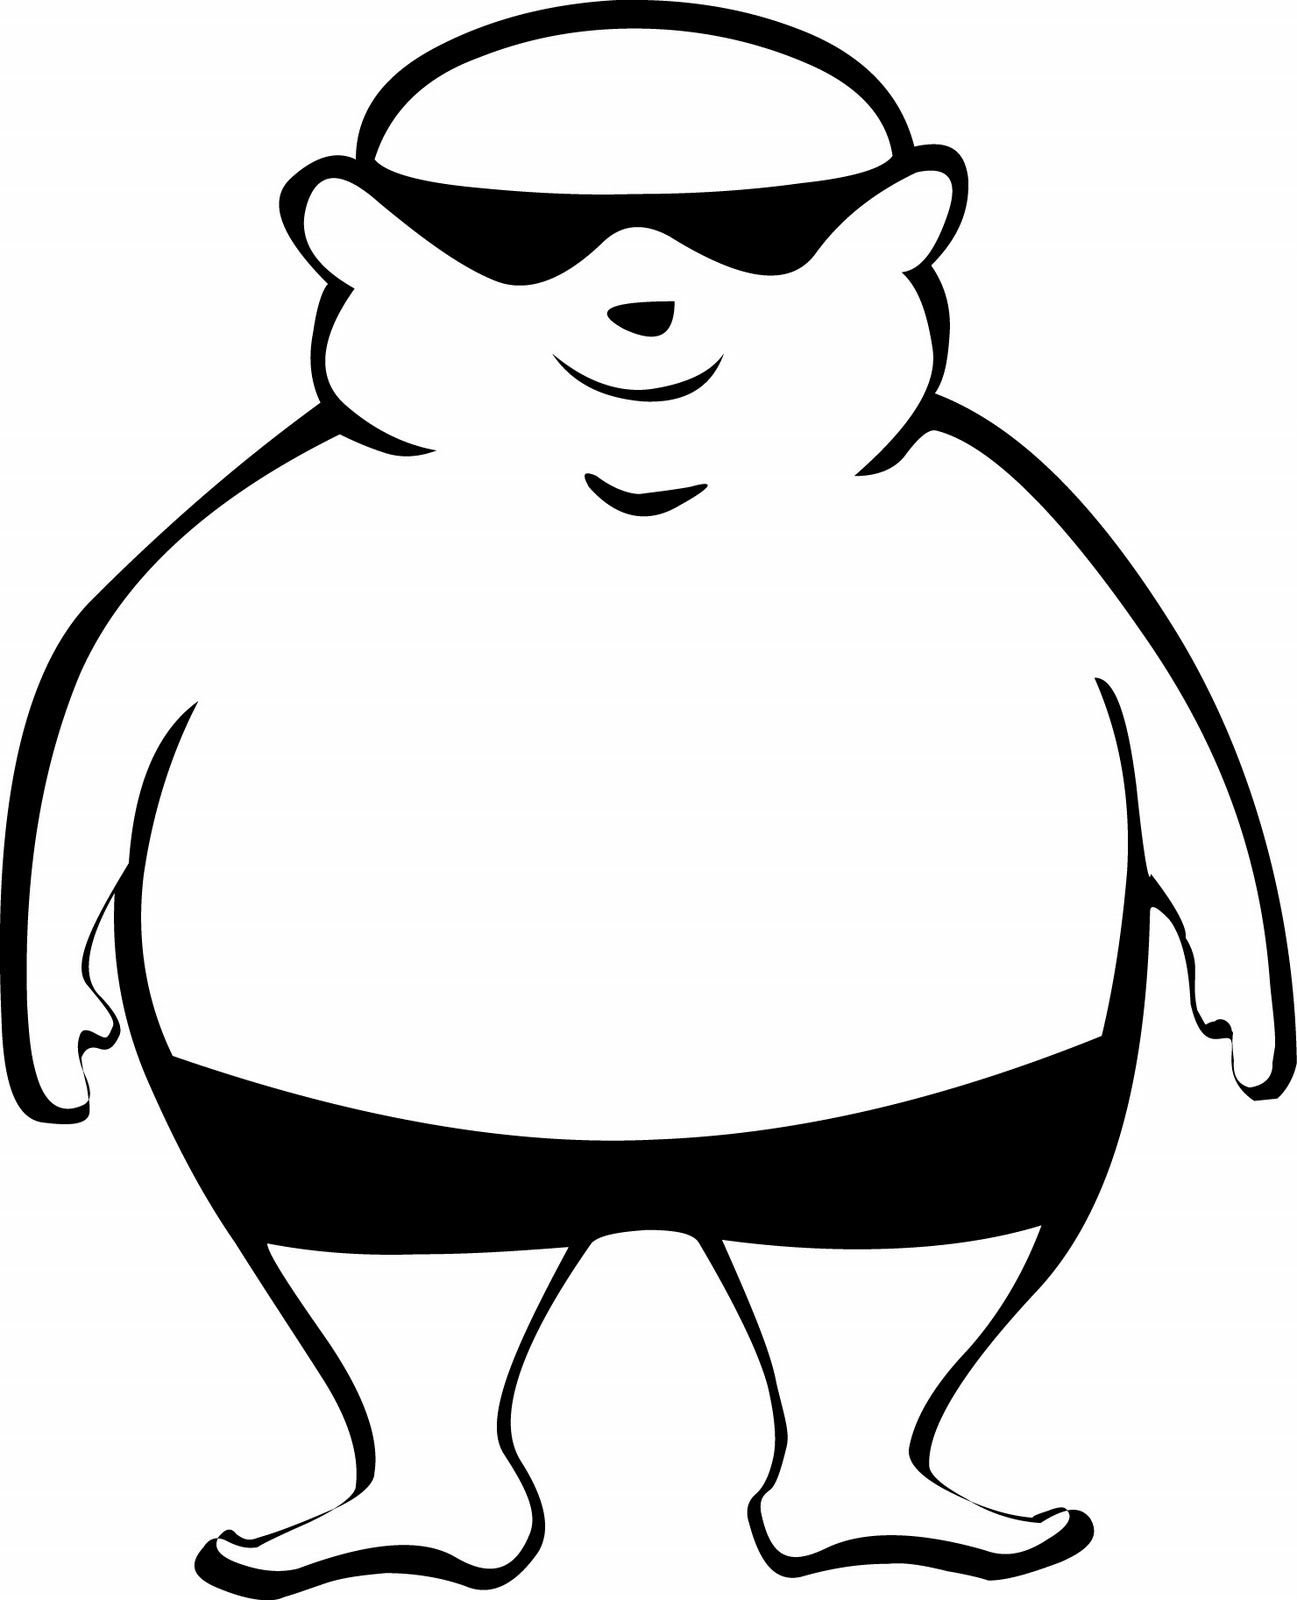 Chubby Cartoon Wallpaper. Chubby Panda